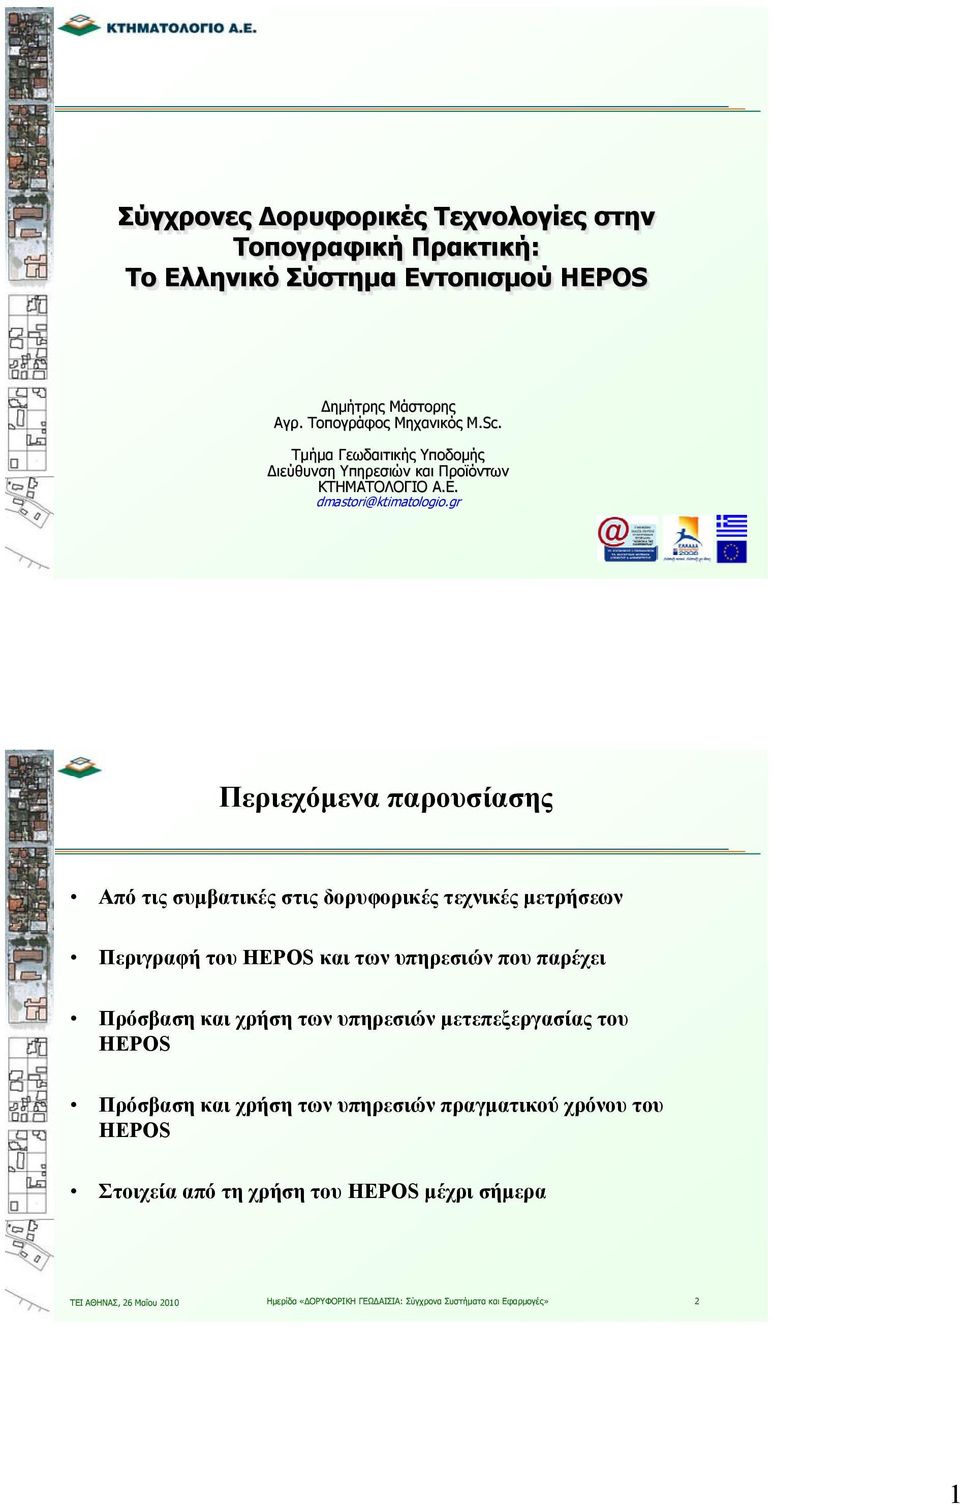 gr Περιεχόμενα παρουσίασης Από τις συμβατικές στις δορυφορικές τεχνικές μετρήσεων Περιγραφή του HEPOS και των υπηρεσιών που παρέχει Πρόσβαση και χρήση των